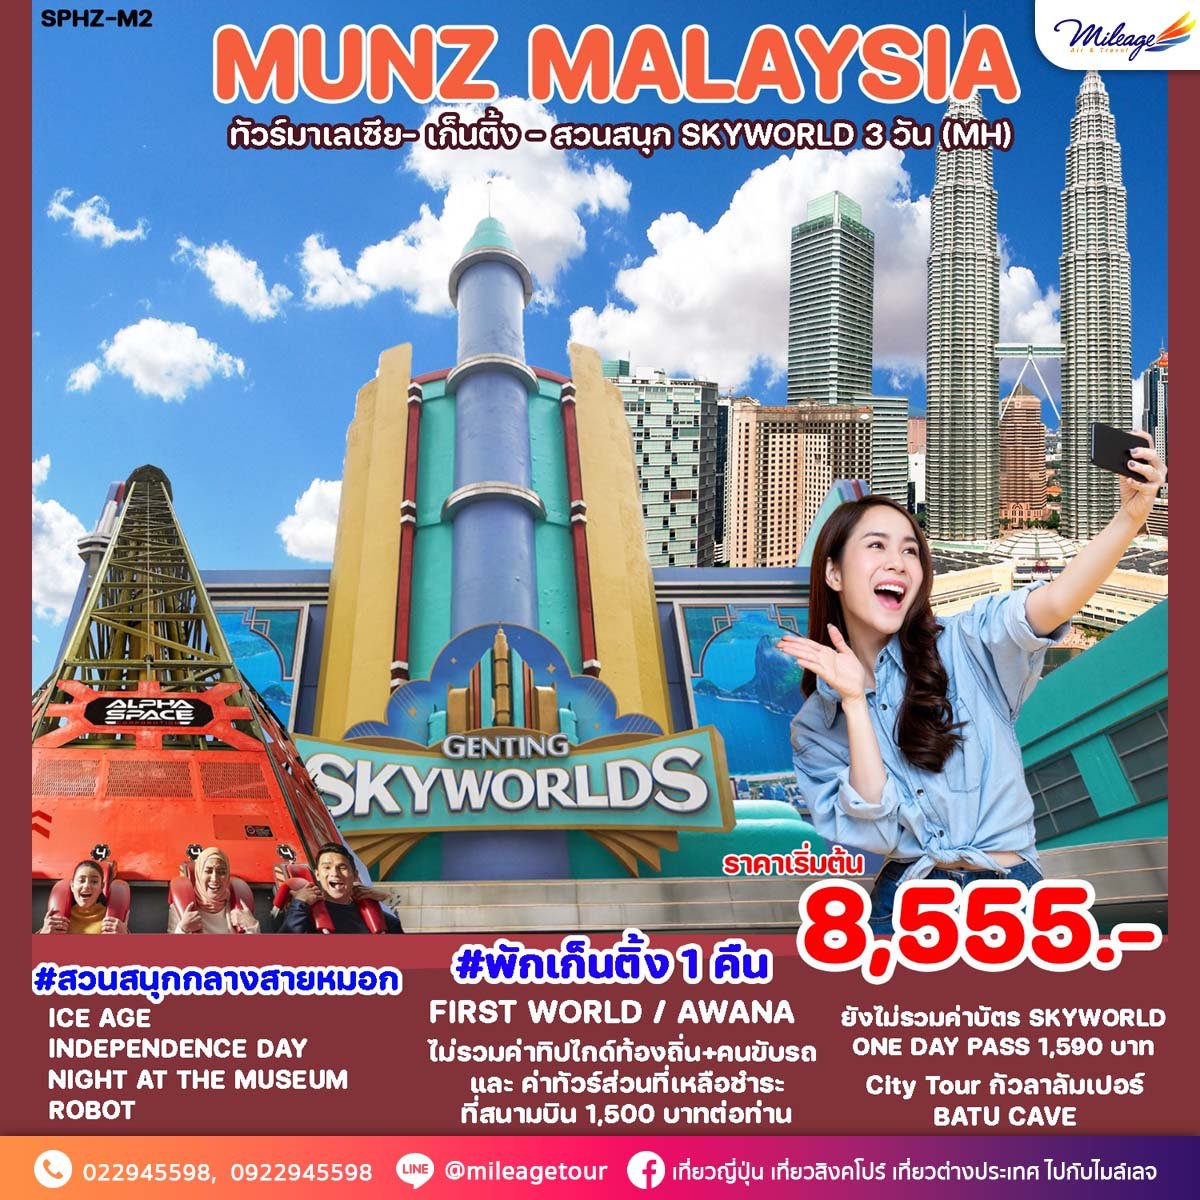 MUNZ MALAYSIA ทัวร์มาเลเซีย เก็นติ้ง สวนสนุก SKY WORLD 3 วัน 2 คิน โดยสายการบินมาเลเซีย แอร์ไลน์ เดินทางได้ถึง พฤษภาคม 2567